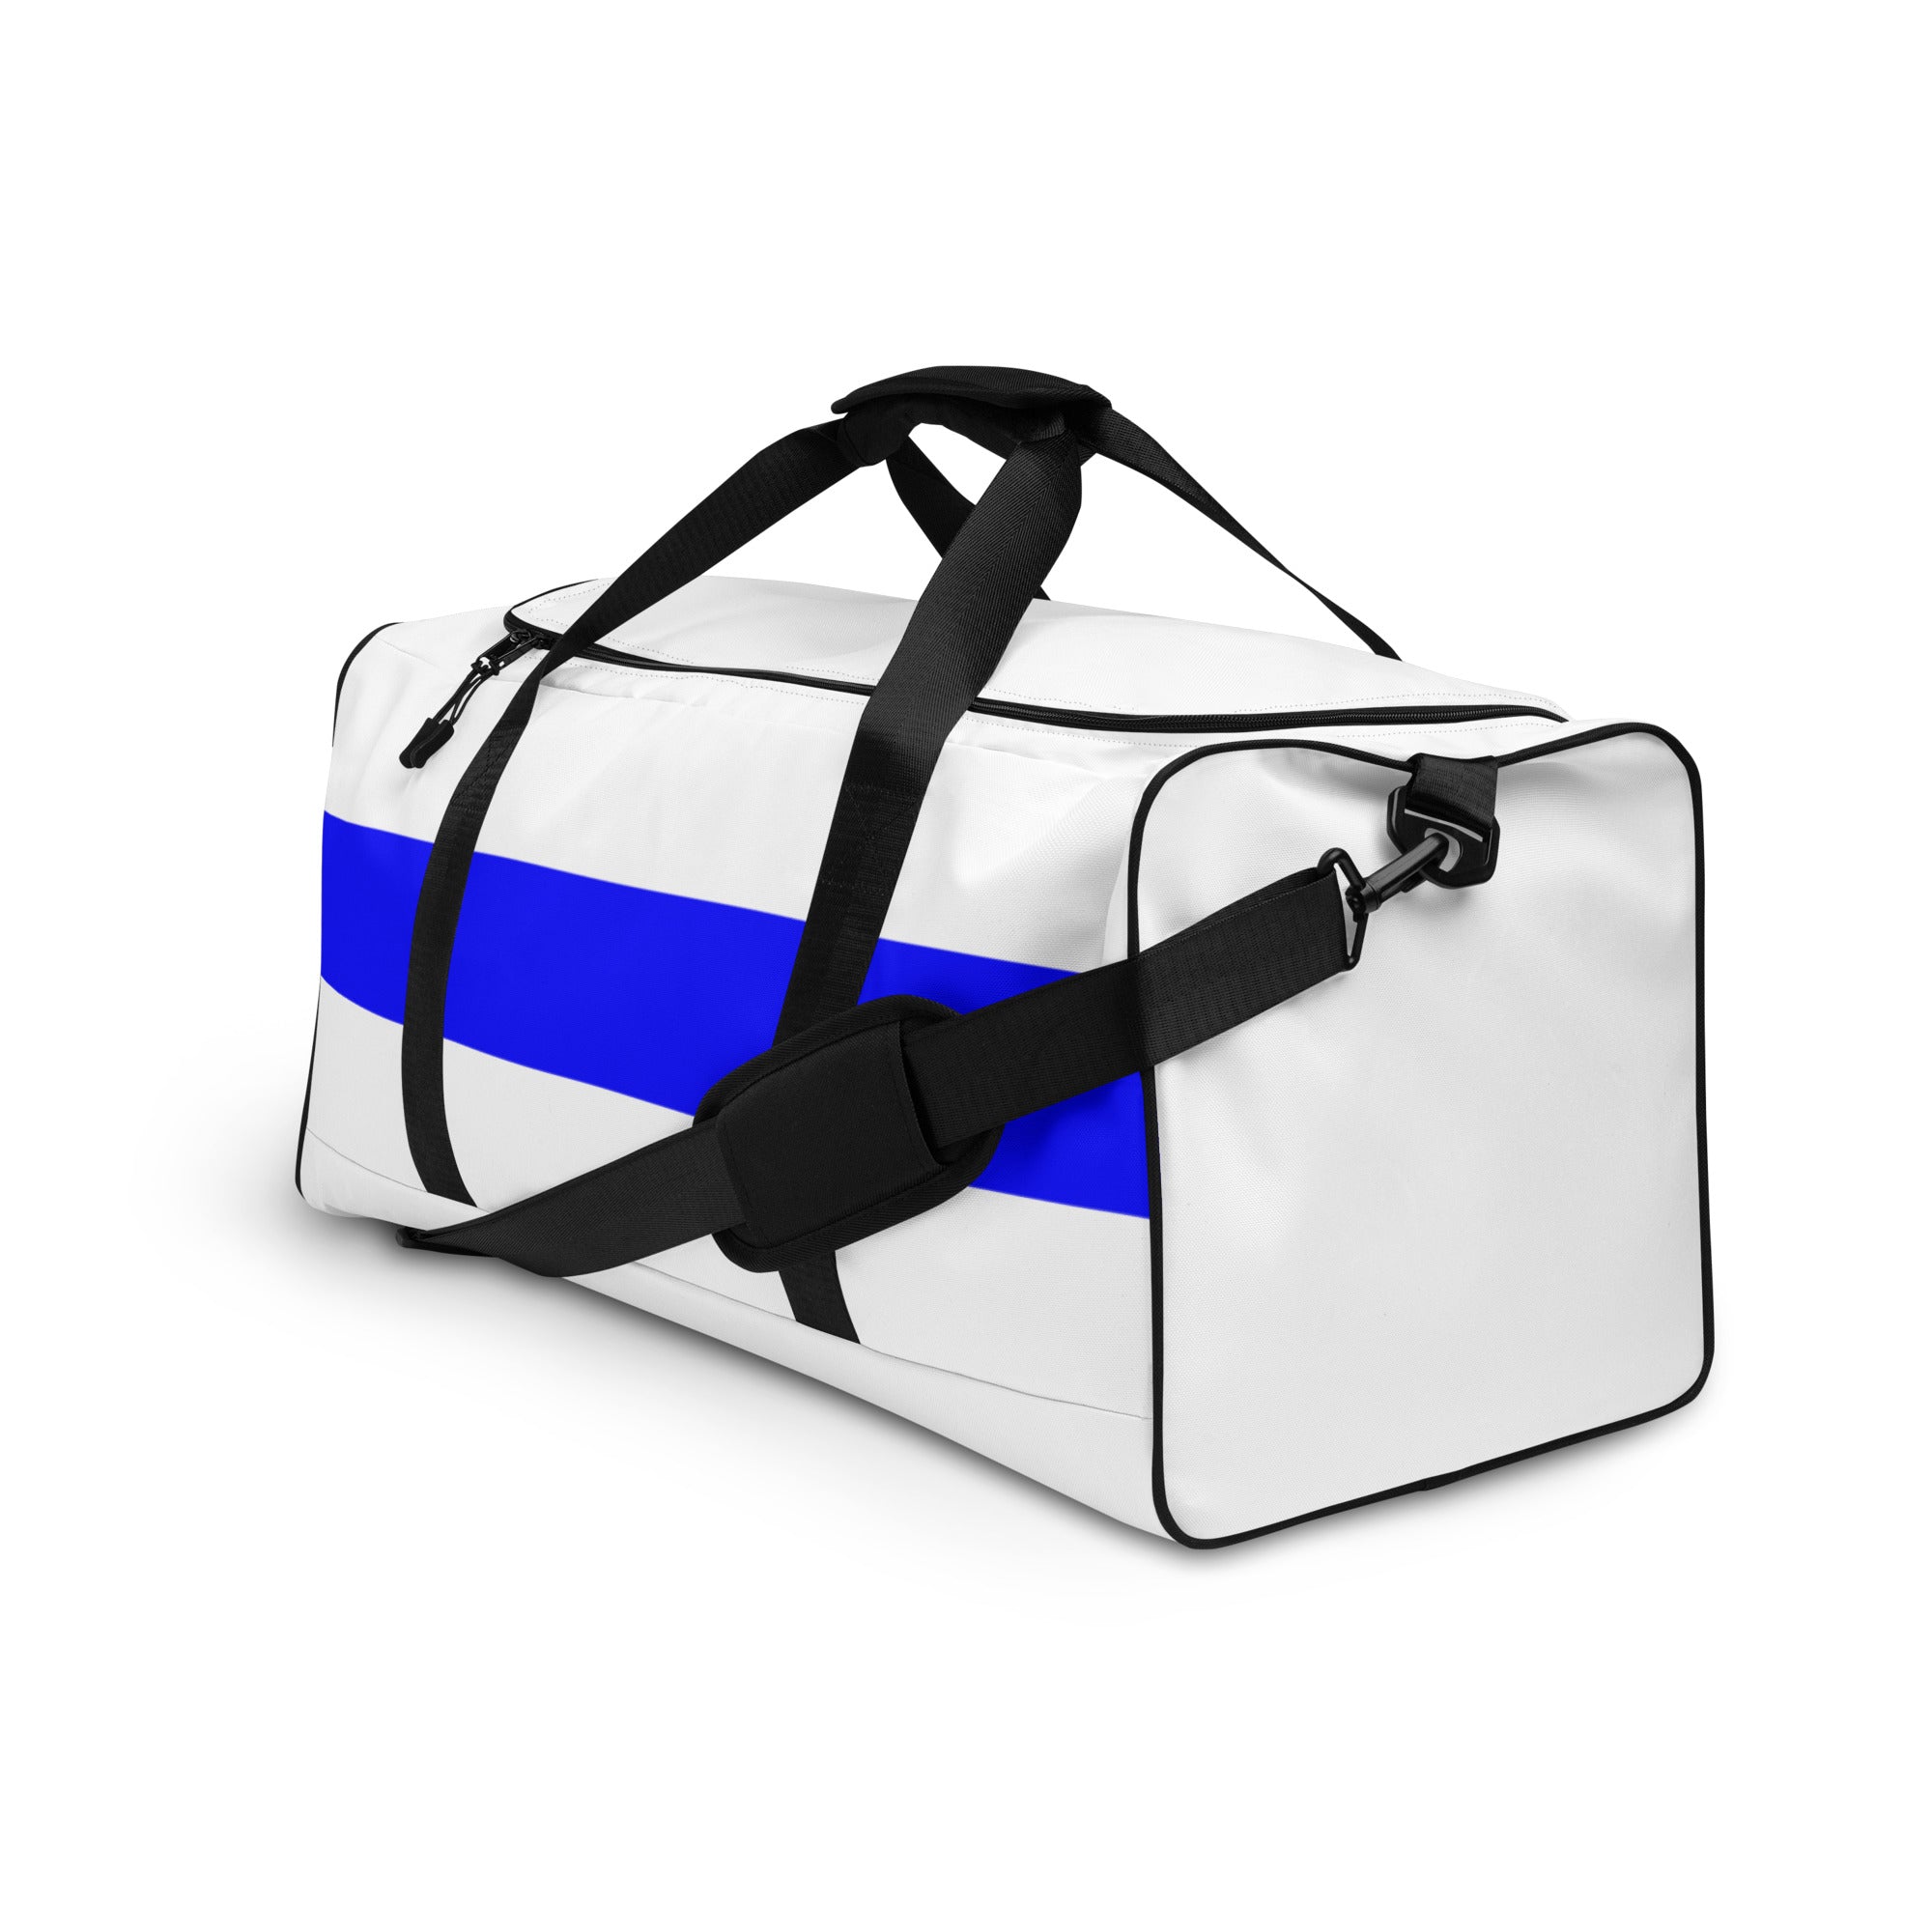 Thin Blue Line White Duffle Bag